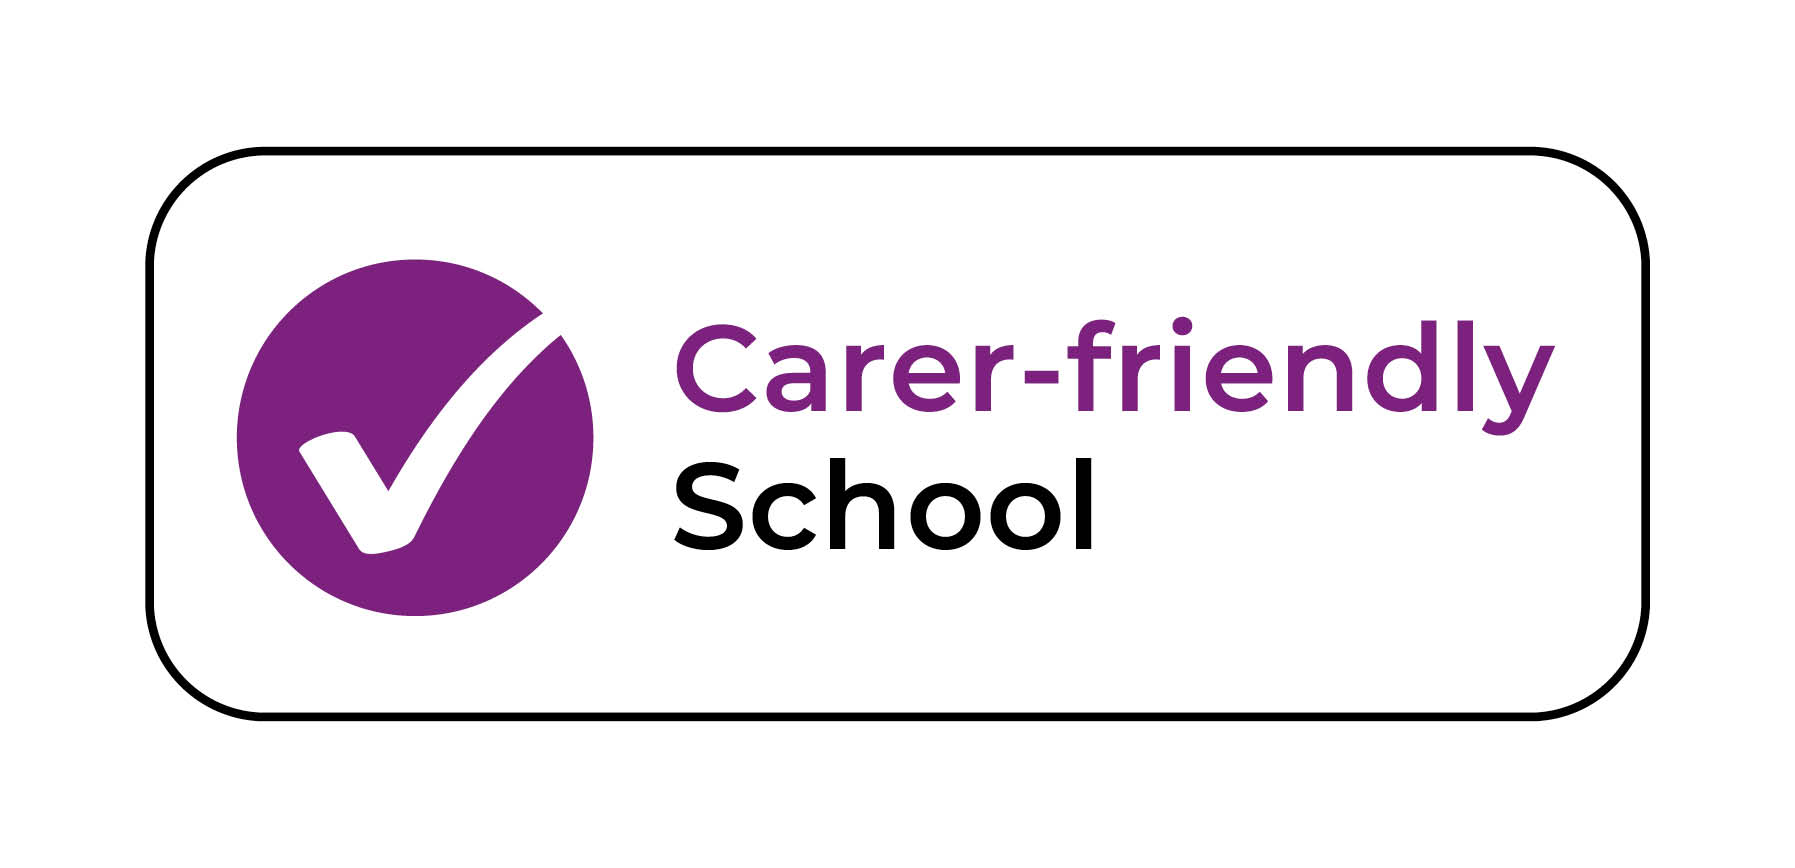 Carer_Friendly_School.jpg (83 KB)